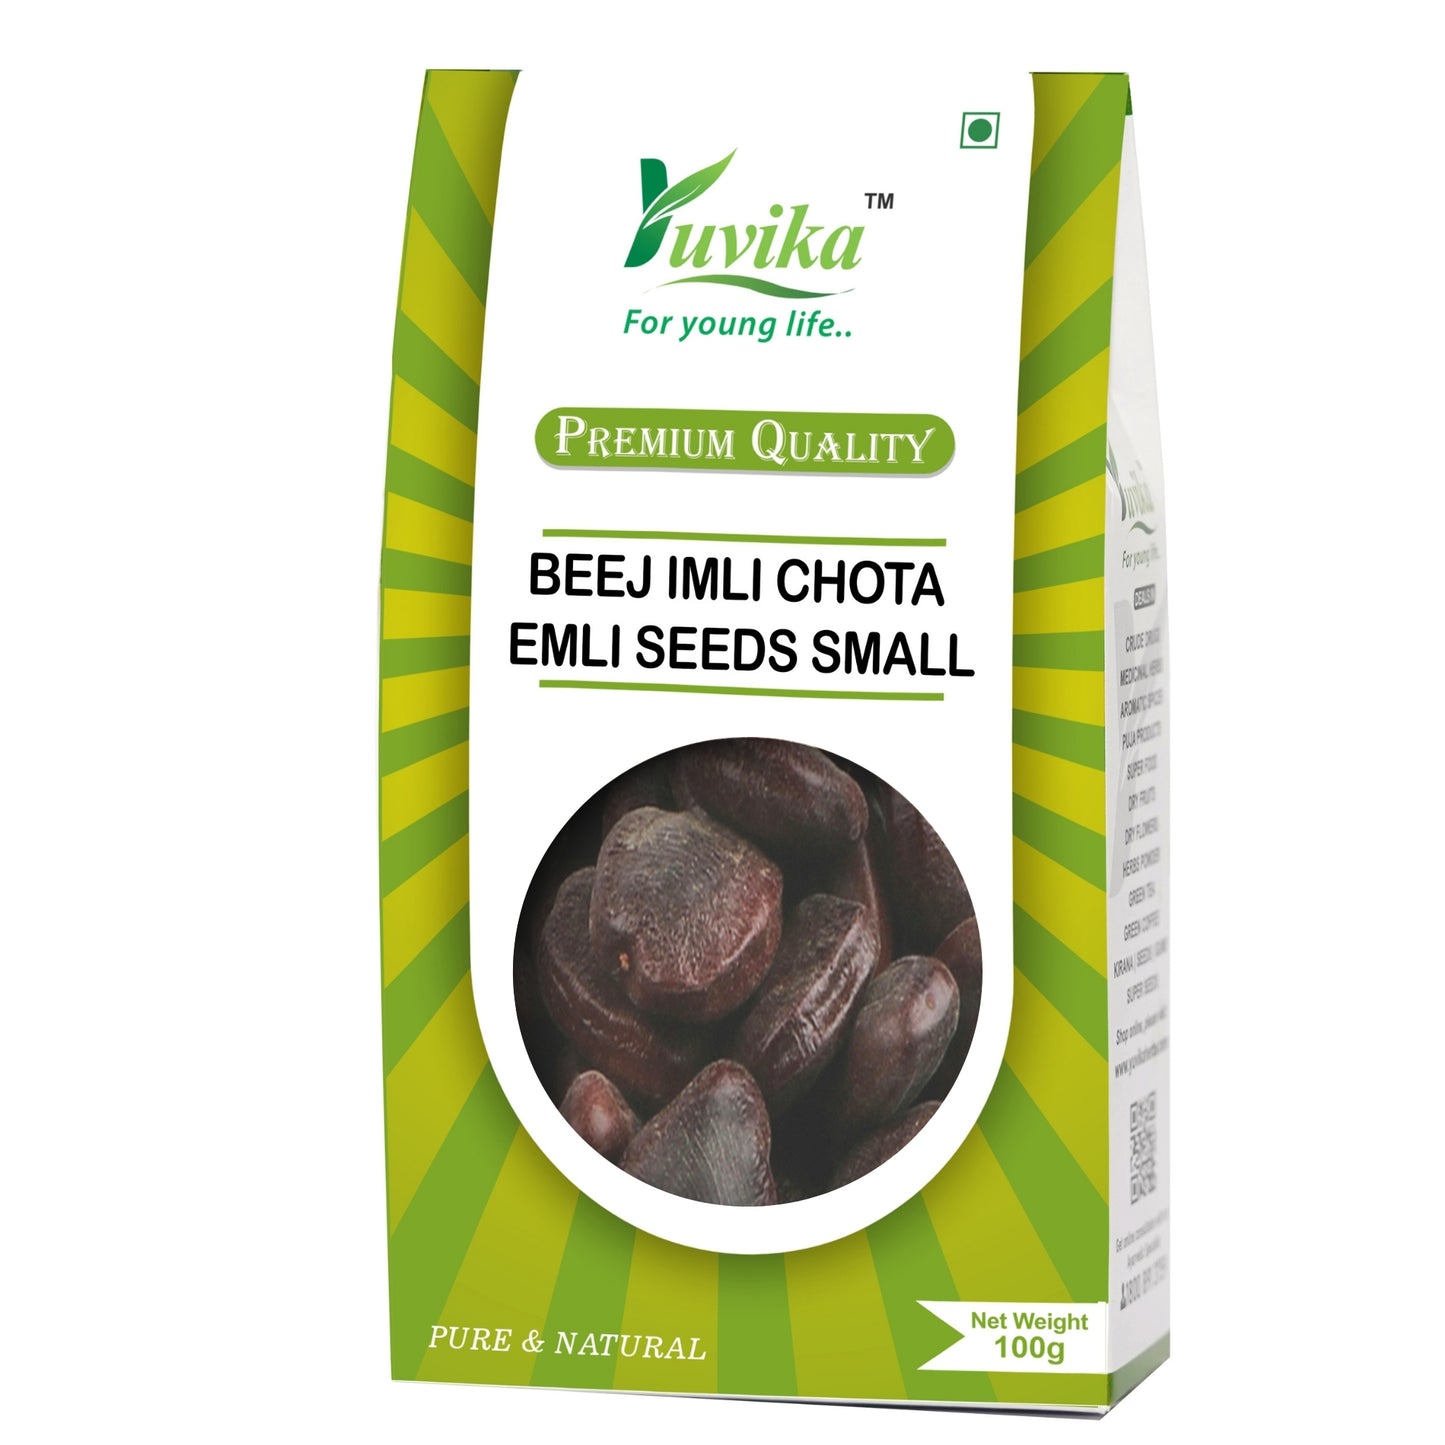 Beej Imli Chota - Tamarindus Indica - Emli Seeds Small  - Tamarind Seeds Small (100g)